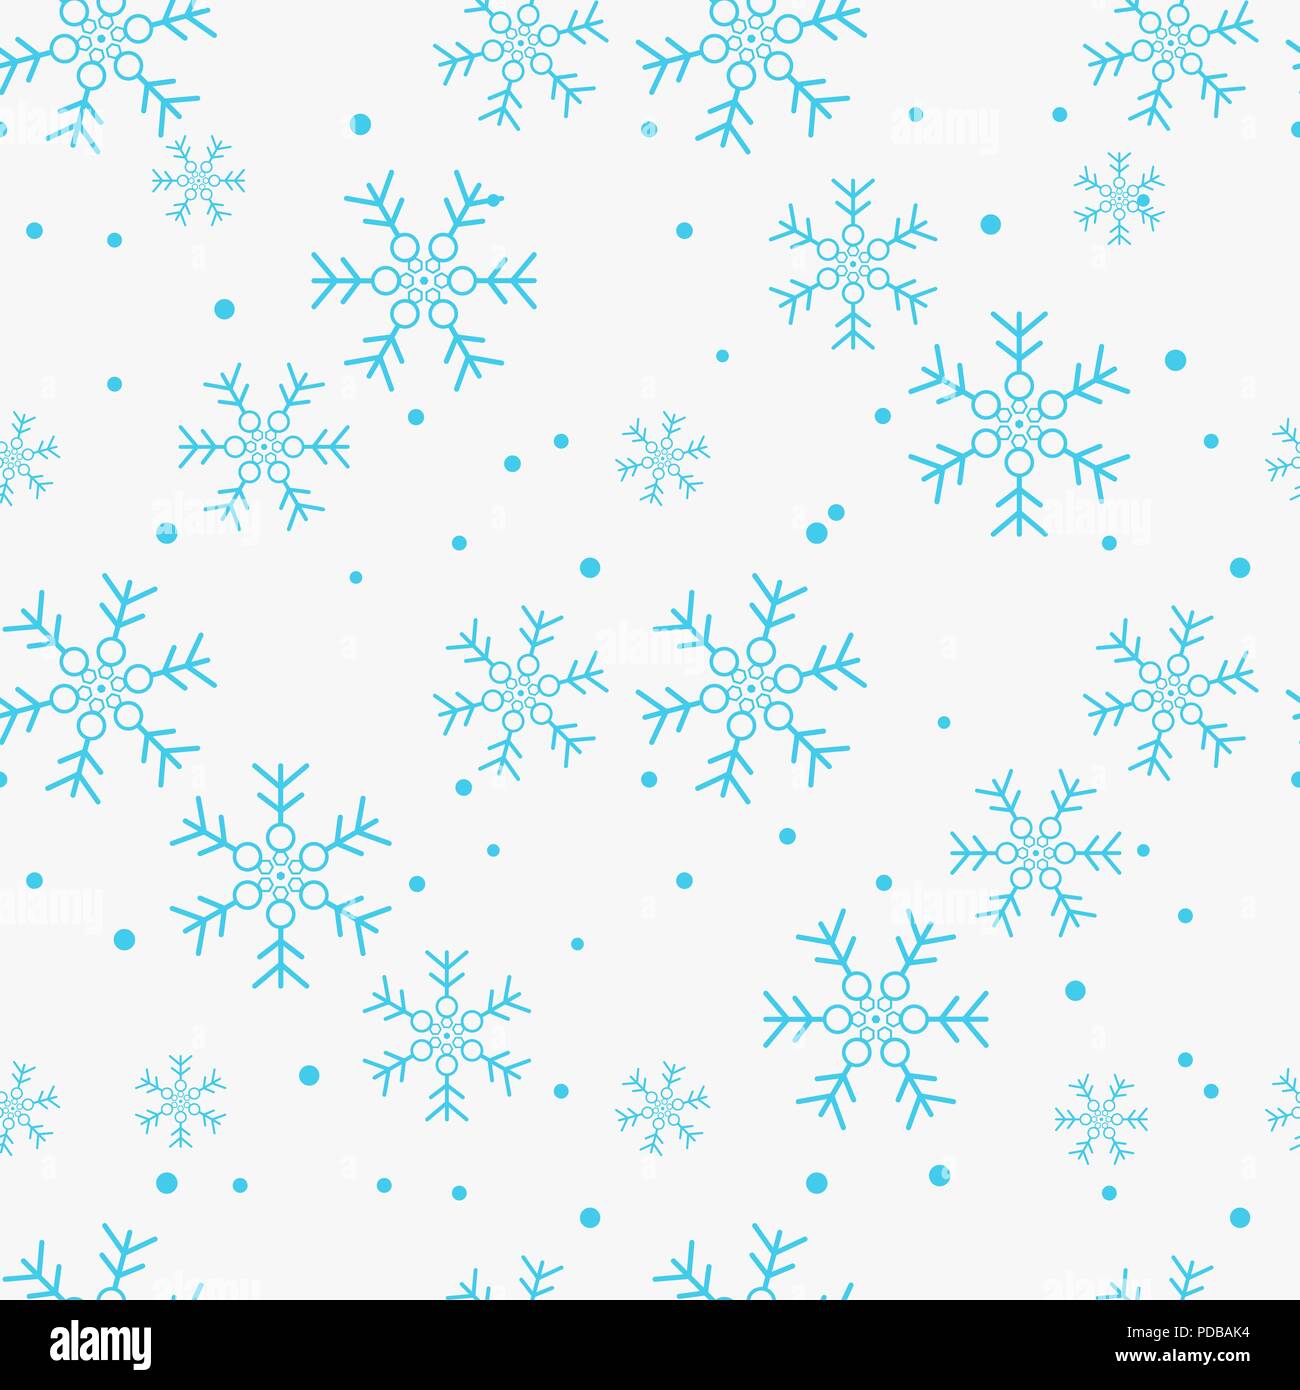 Snowflake simple seamless pattern Blue snow on white background